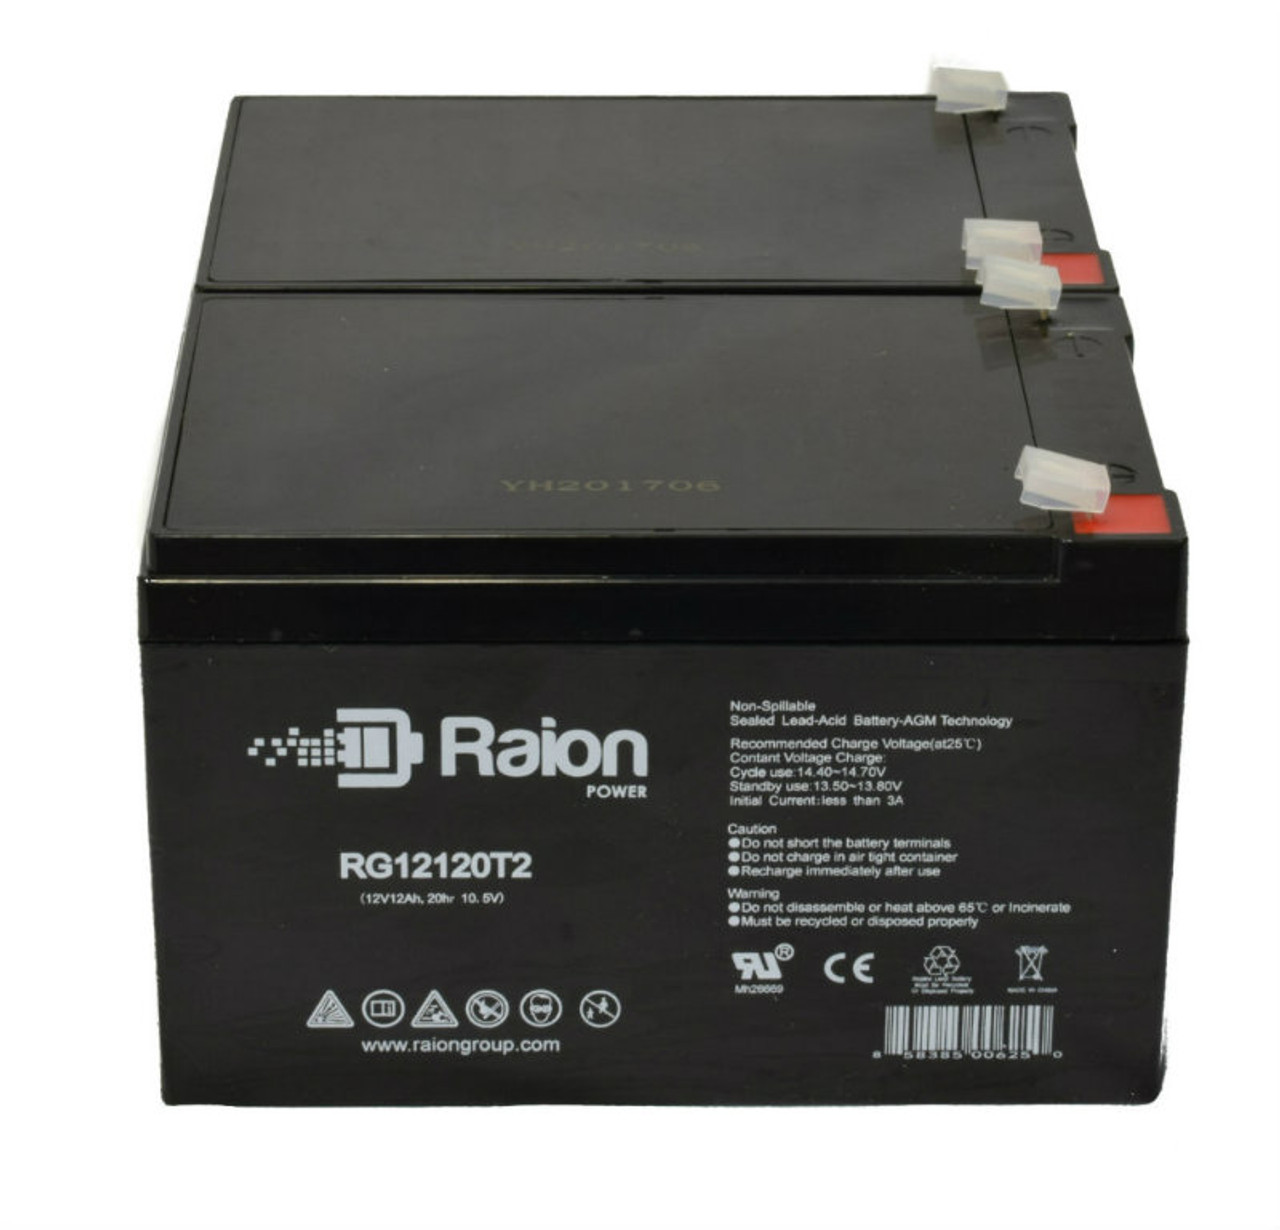 Raion Power 12V 12Ah Non-Spillable Compatible Replacement Battery for DET Power SJ12V12Ah - (2 Pack)